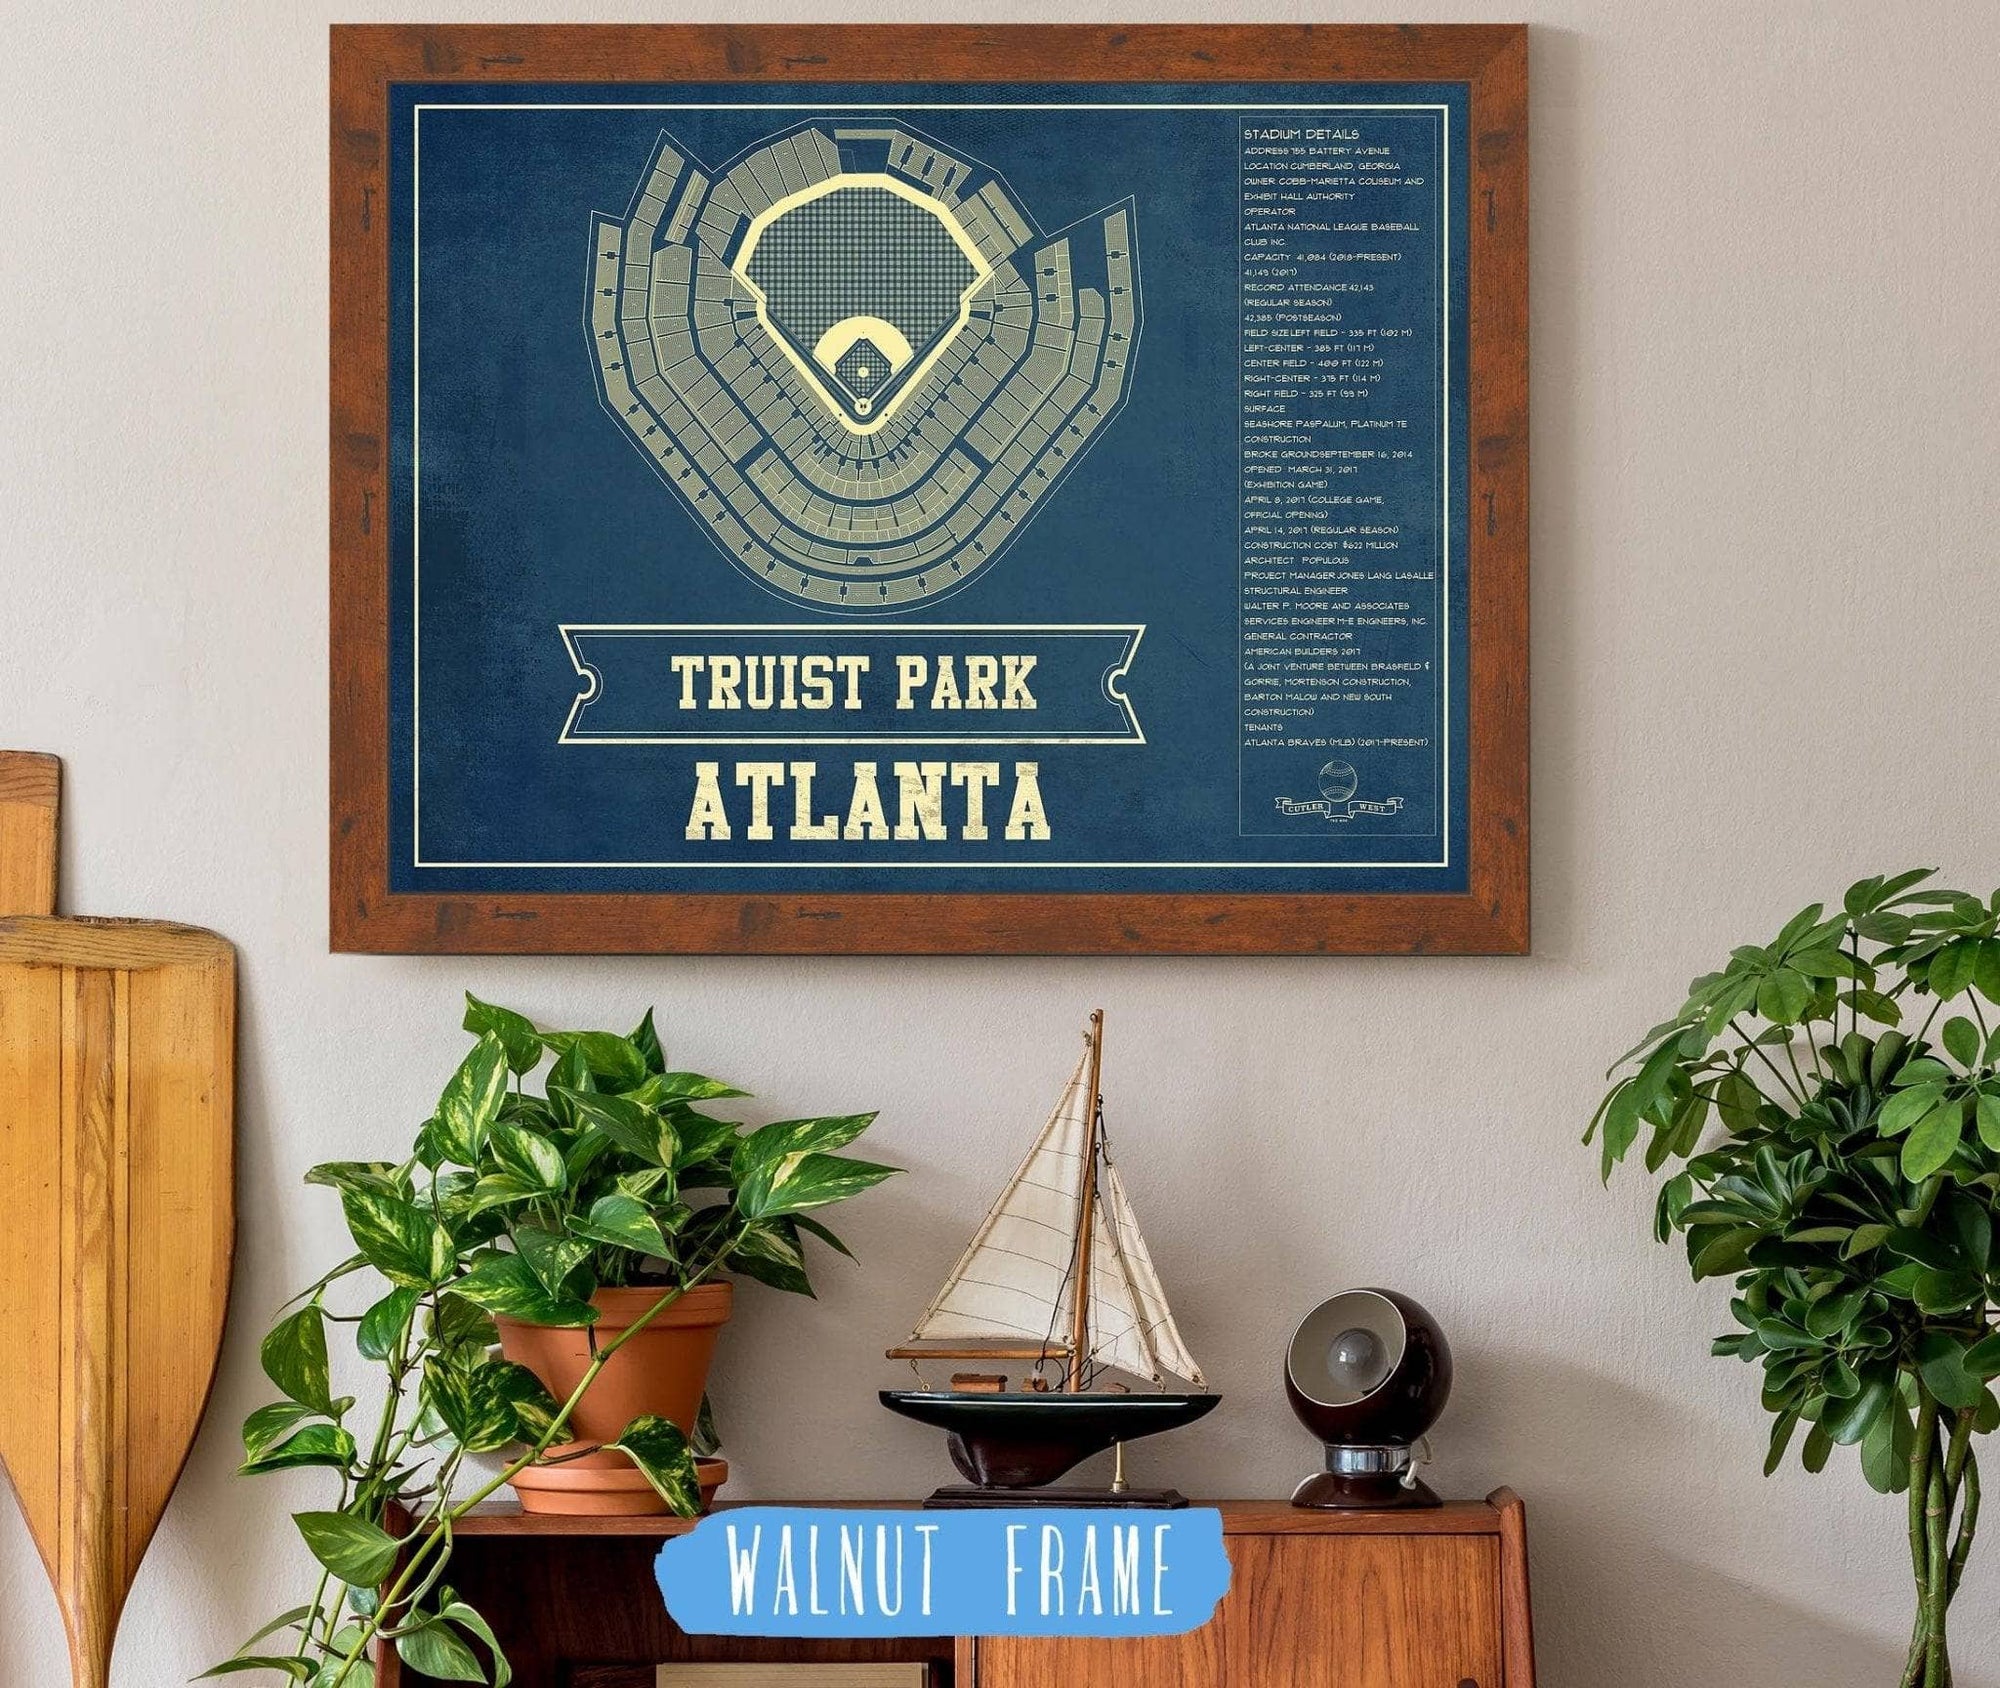 Cutler West Baseball Collection Turner Field - Atlanta Braves (MLB) Vintage Baseball Print